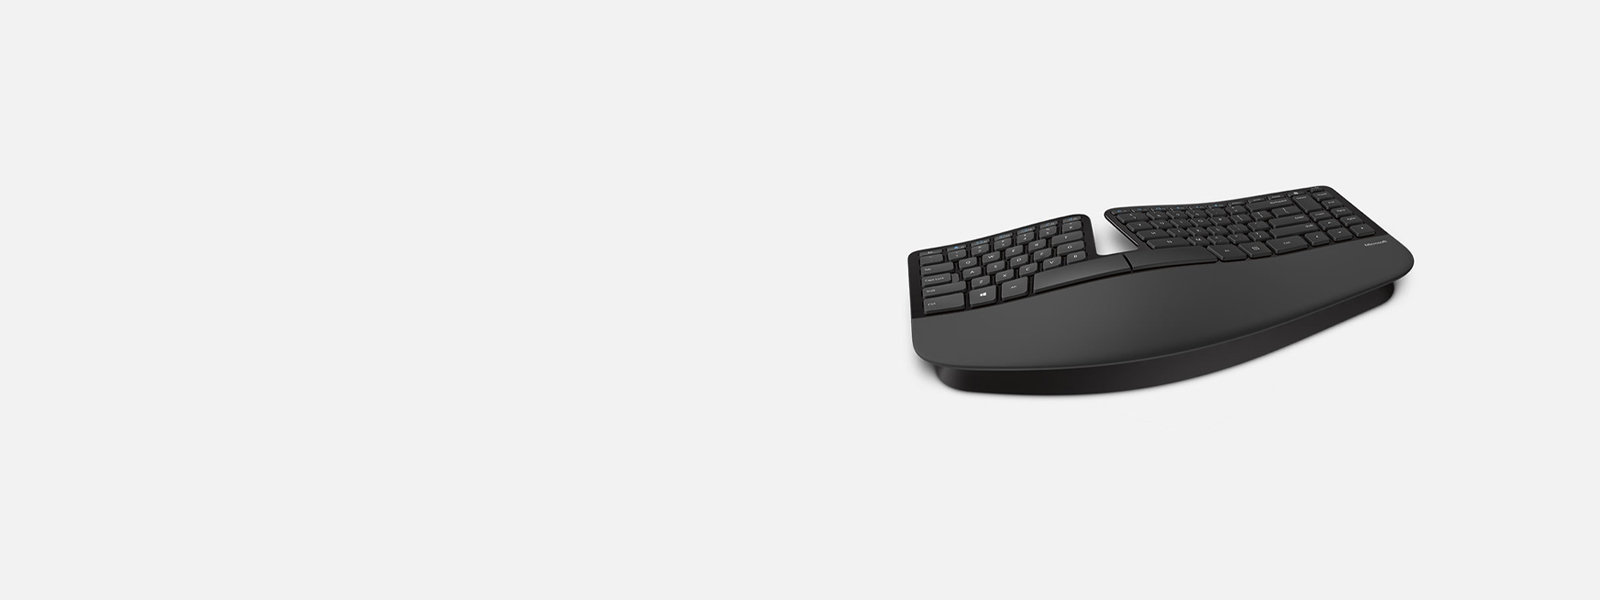 Sculpt Keyboard Business Accessories Microsoft Ergonomic Business for |